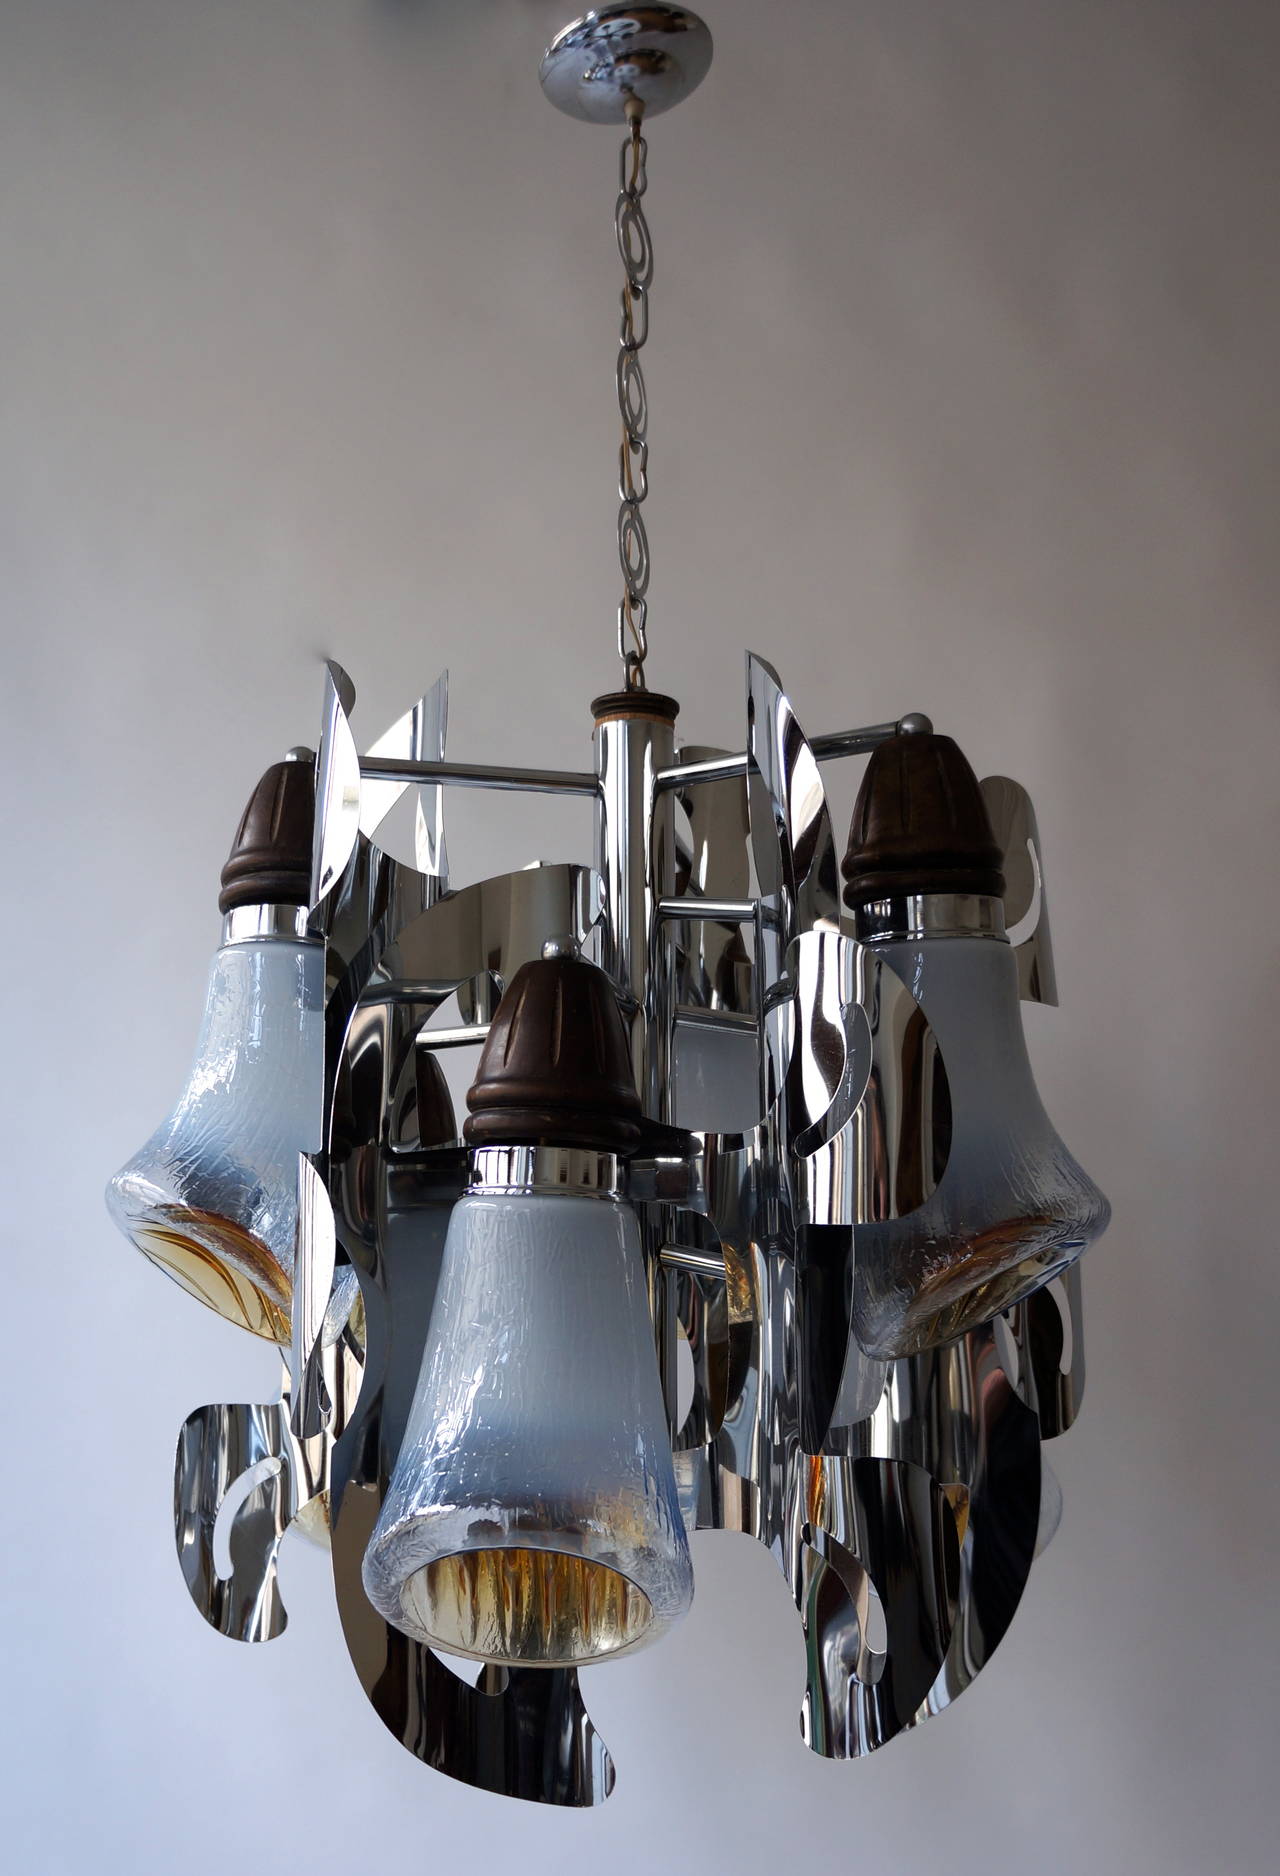 Italian Murano glass chandelier.

Measures: 
Diameter 60 cm.
Height fixture 60 cm.
Total height with chain 108 cm.